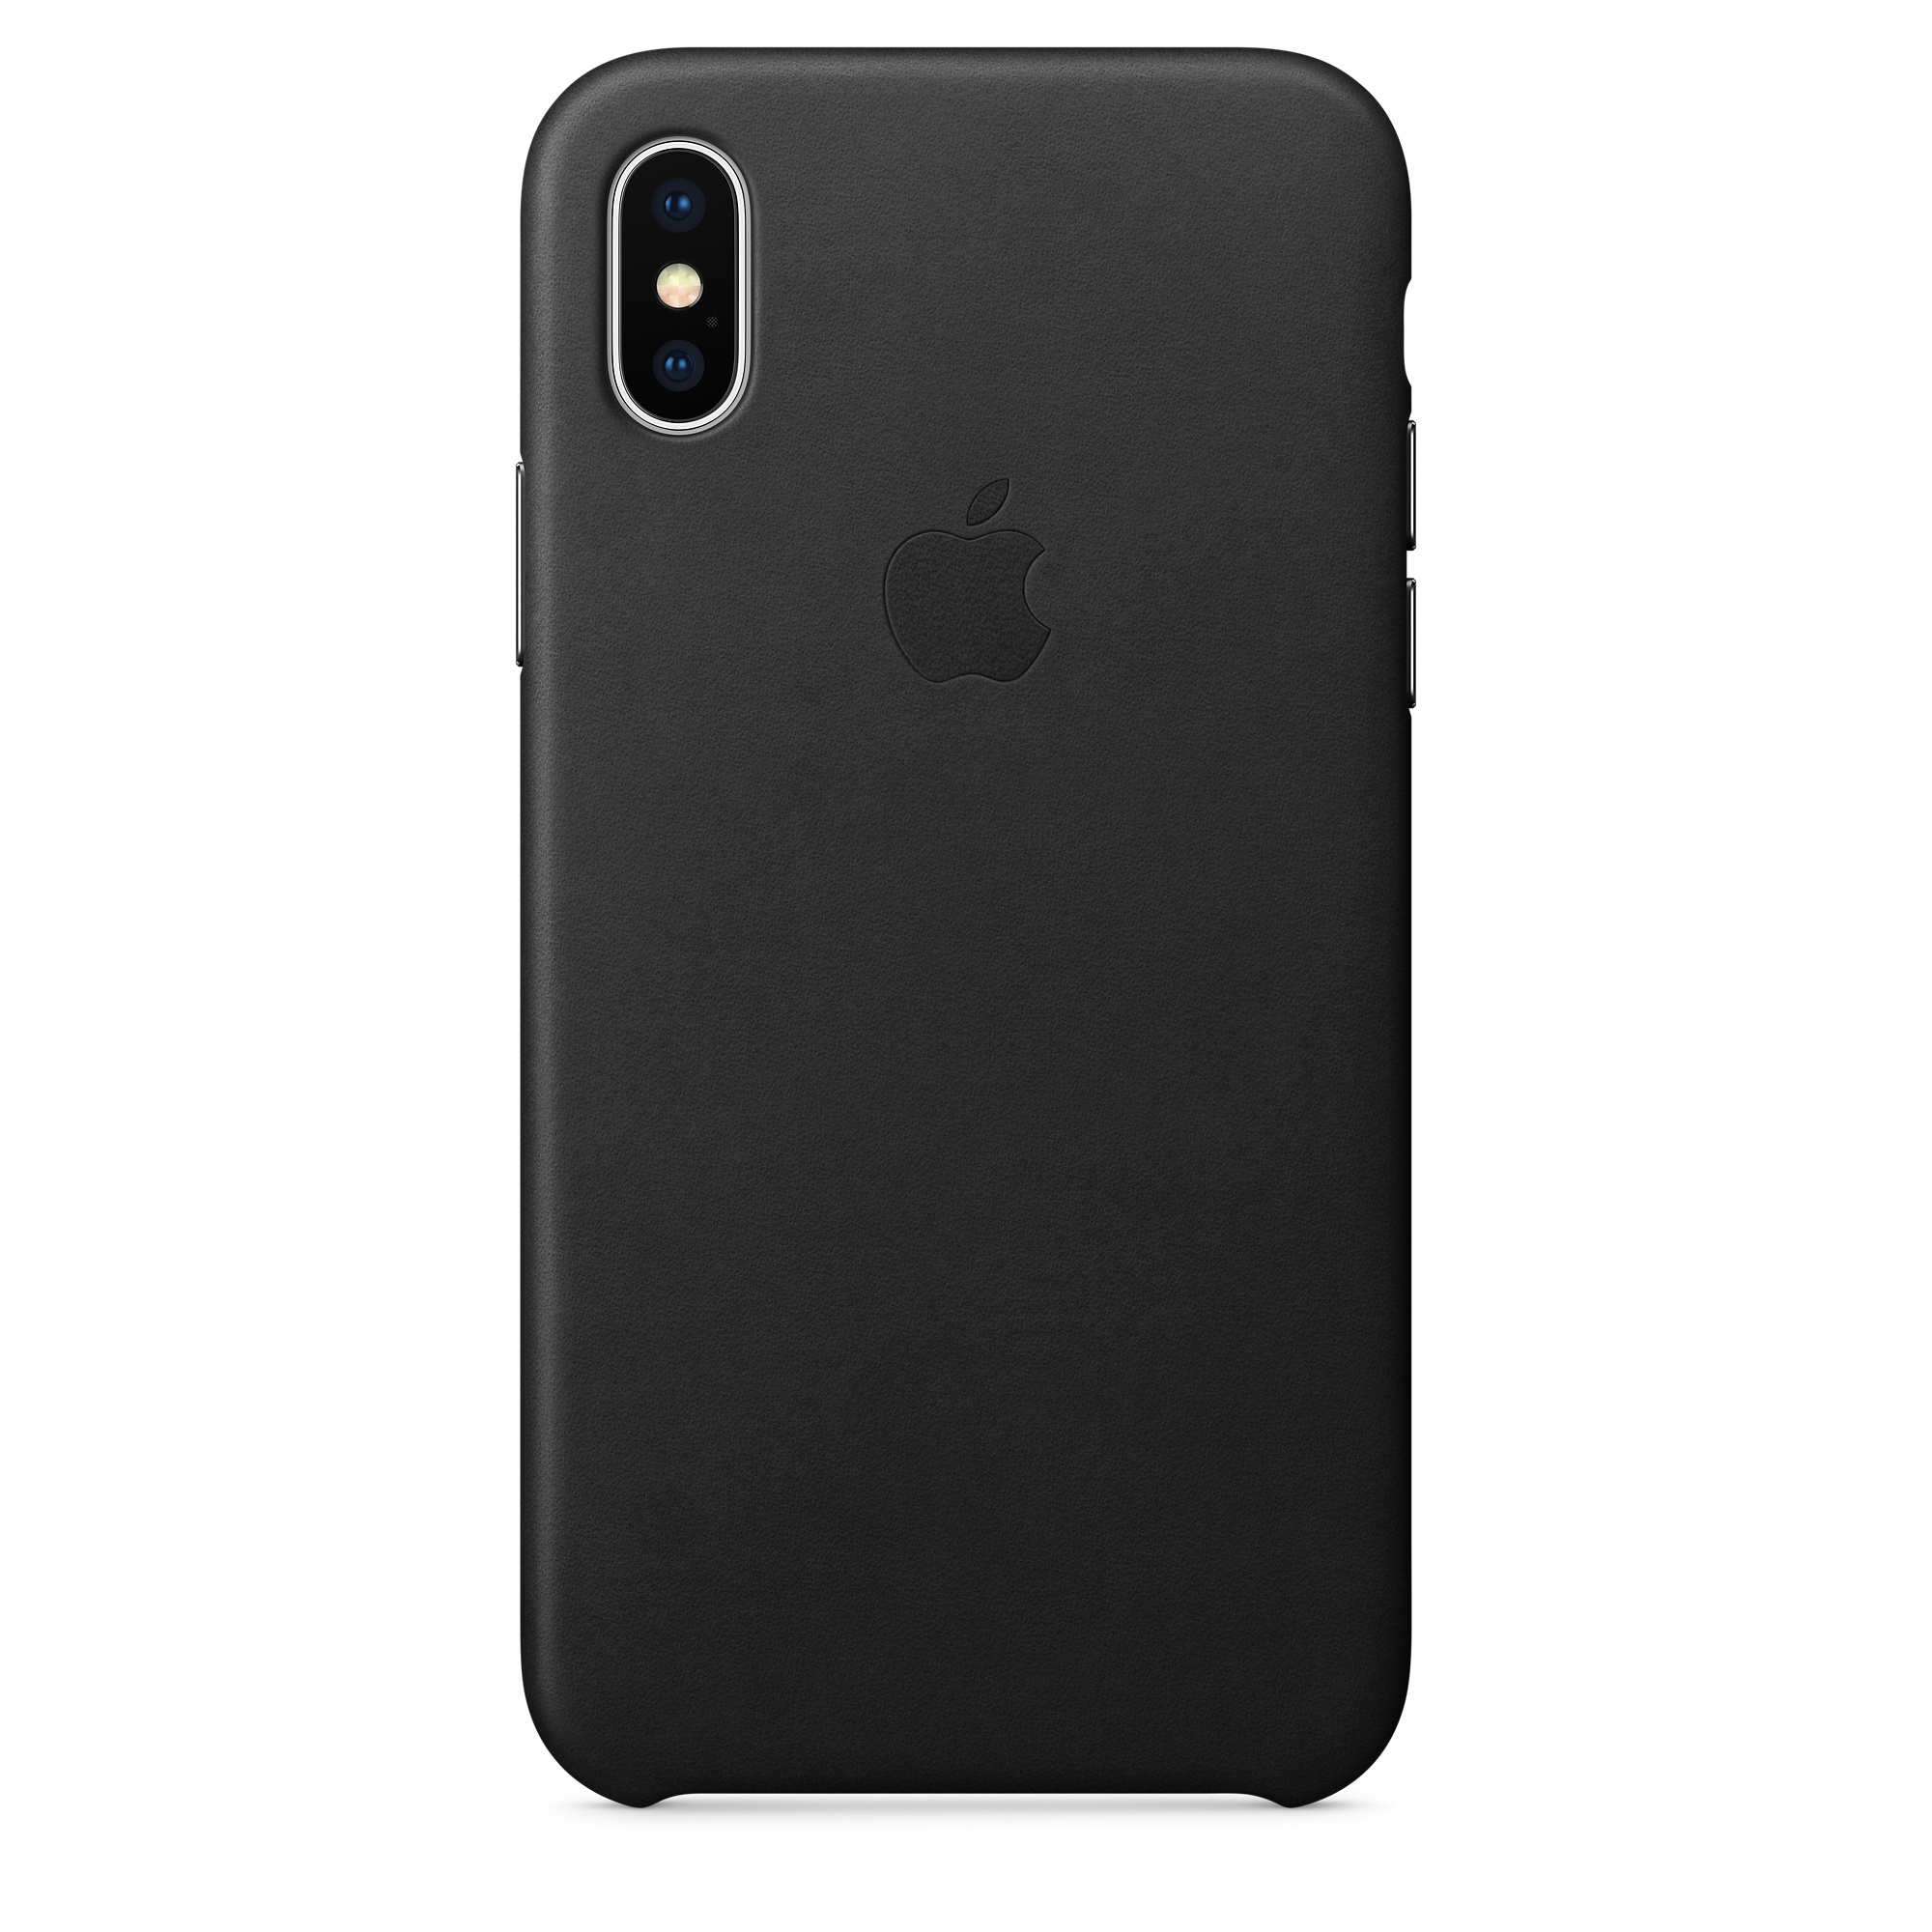 iPhone X Leather Case - Black - Apple